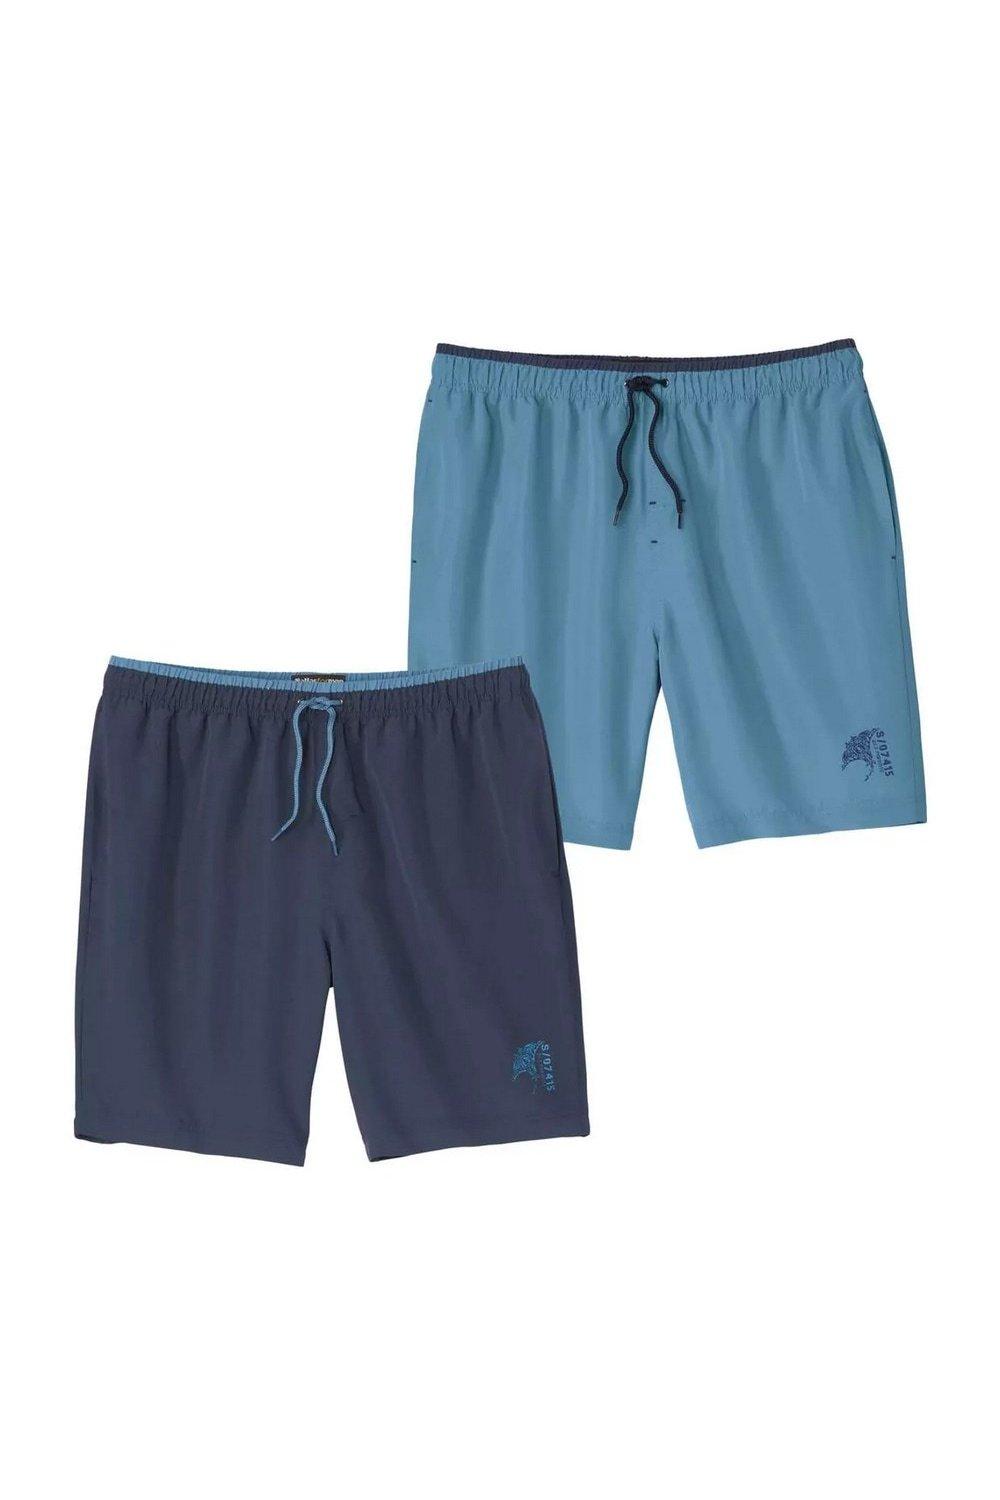 Swim Shorts (Pack of 2)